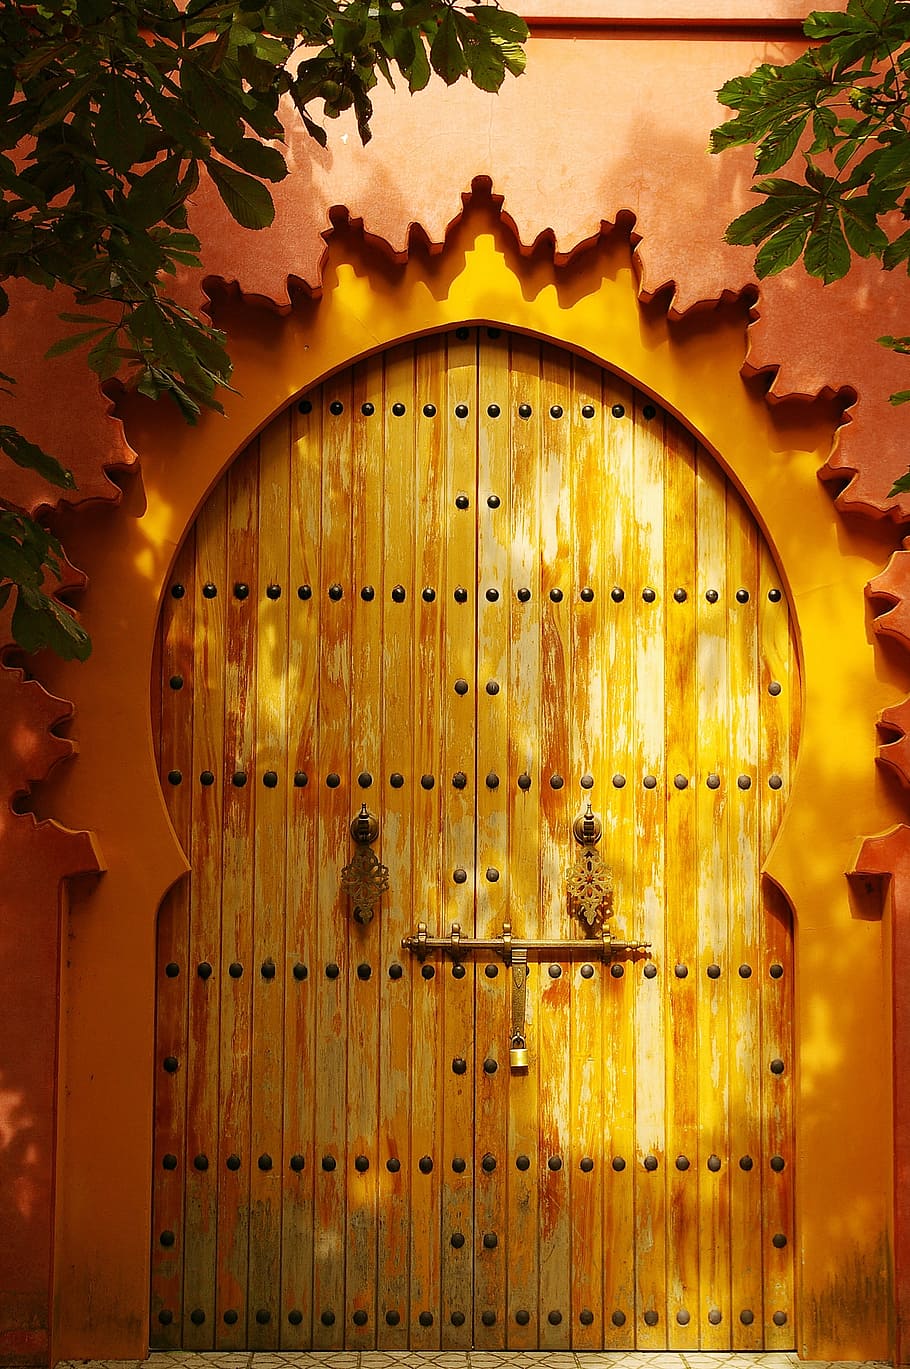 puerta de madera marrón, jardín oriental, jardines del mundo, berlín, decorativos, adornos, verschnörkelt, puerta, arco redondo, pestillos de hierro